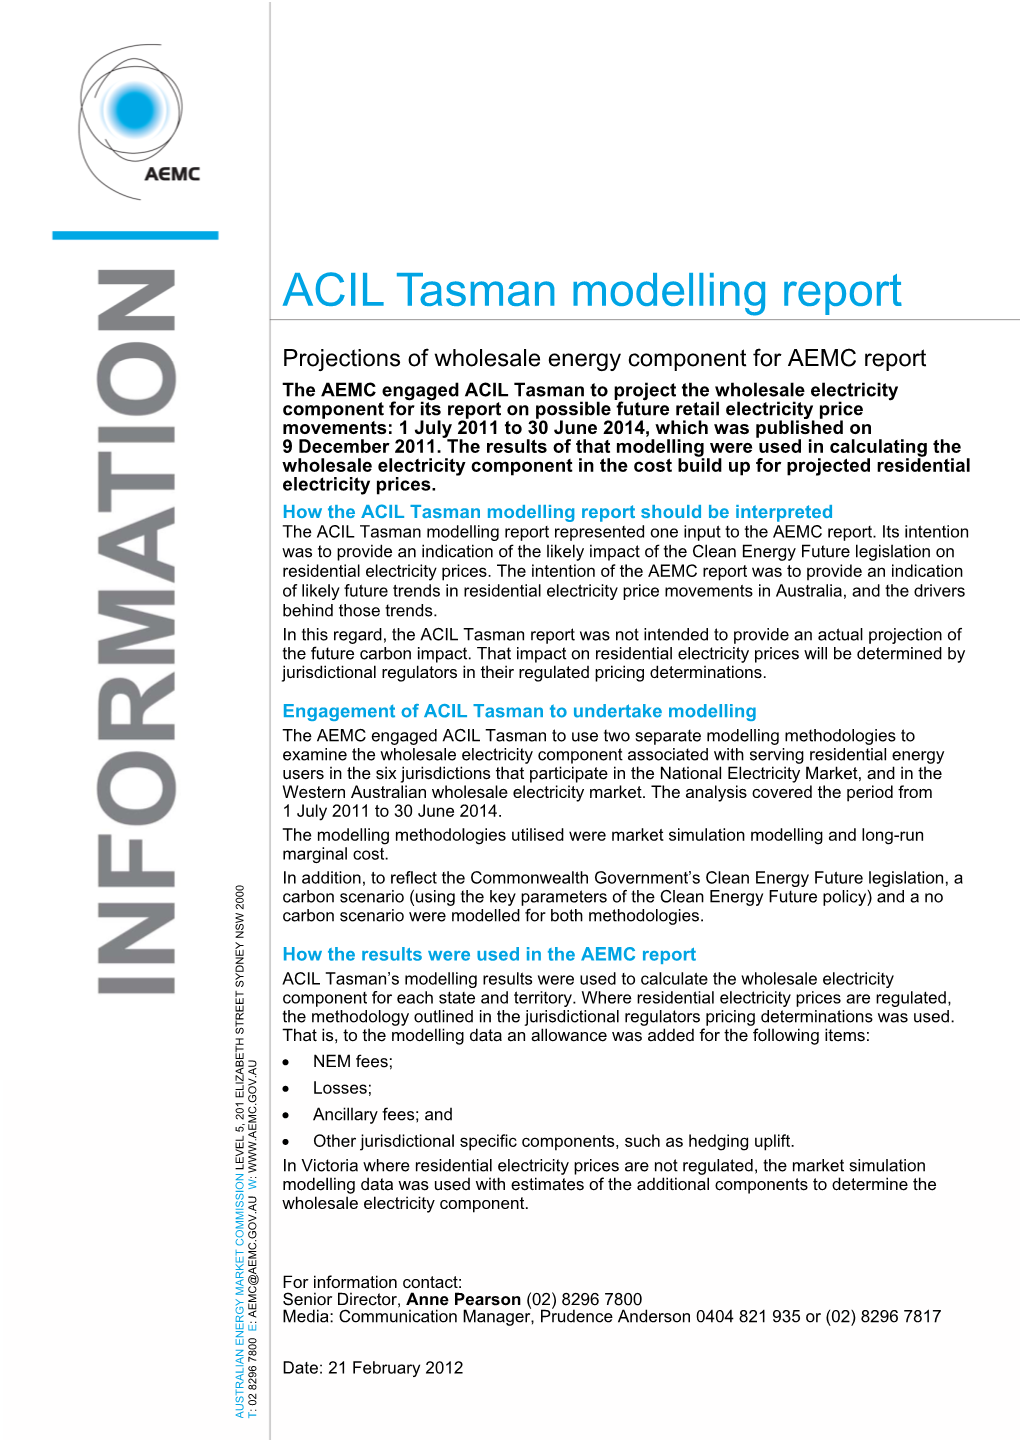 ACIL Tasman Modelling Report